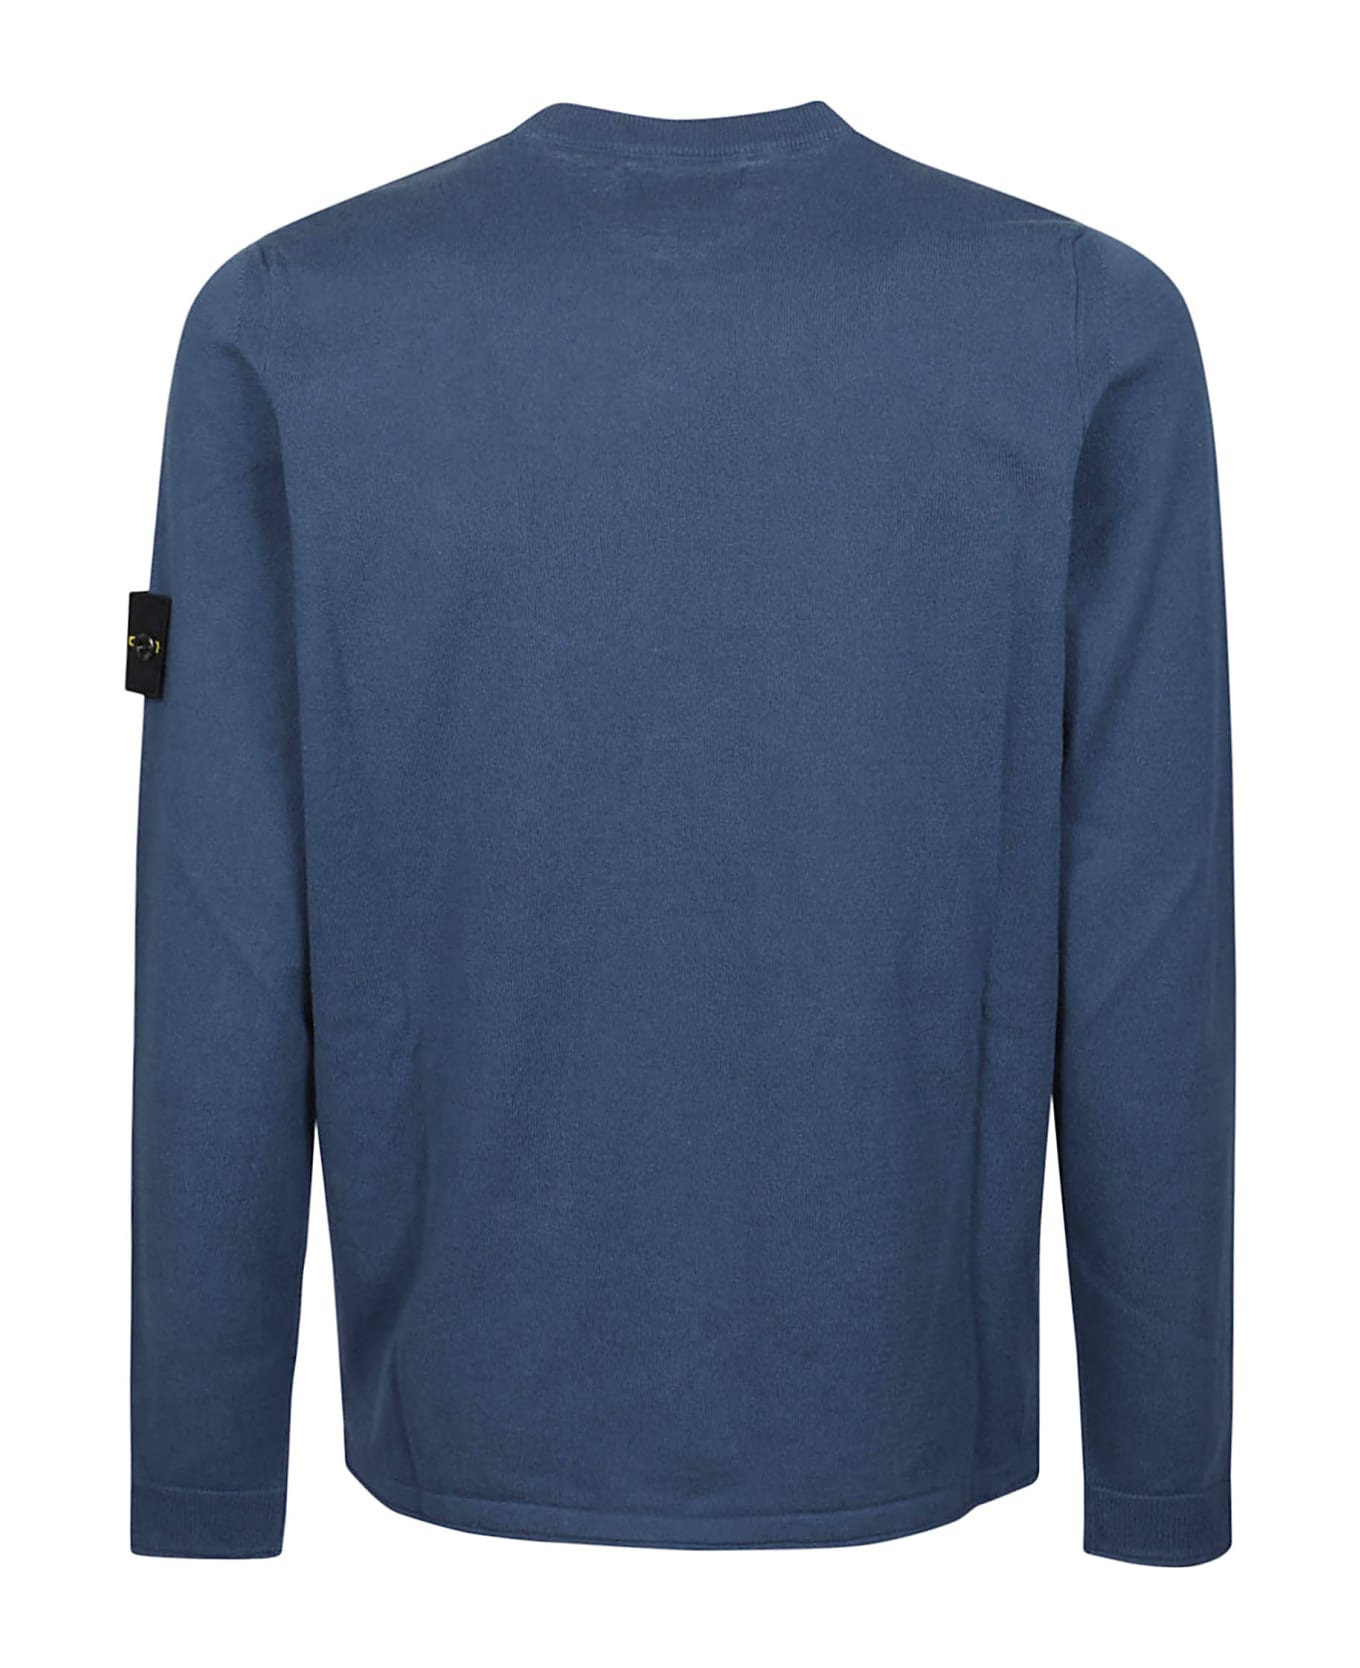 Stone Island Sweater - Blue